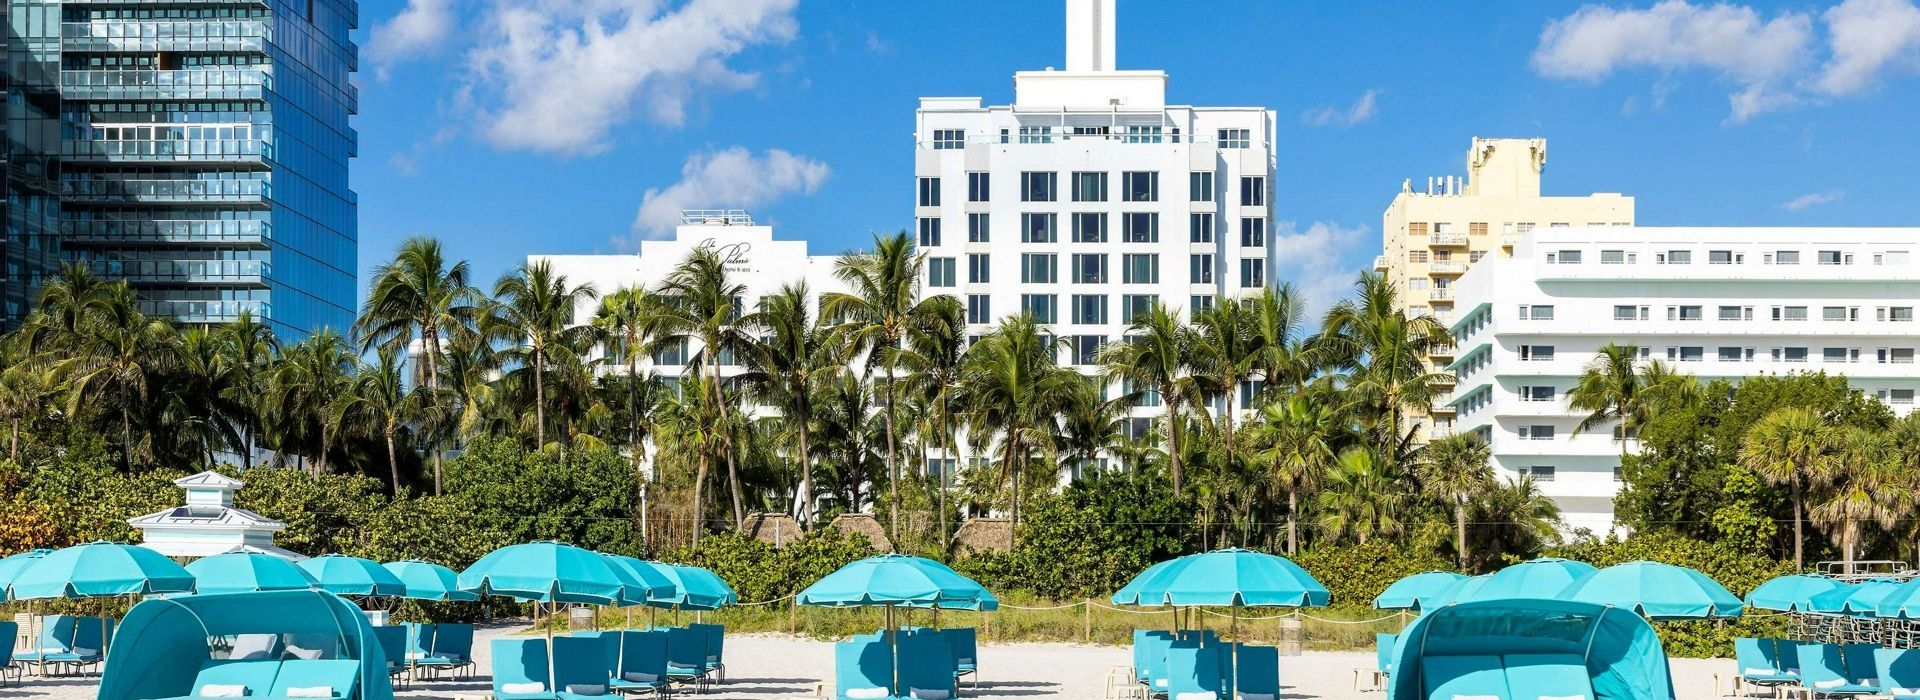 The Palms Hotel & Spa-Beach.jpg